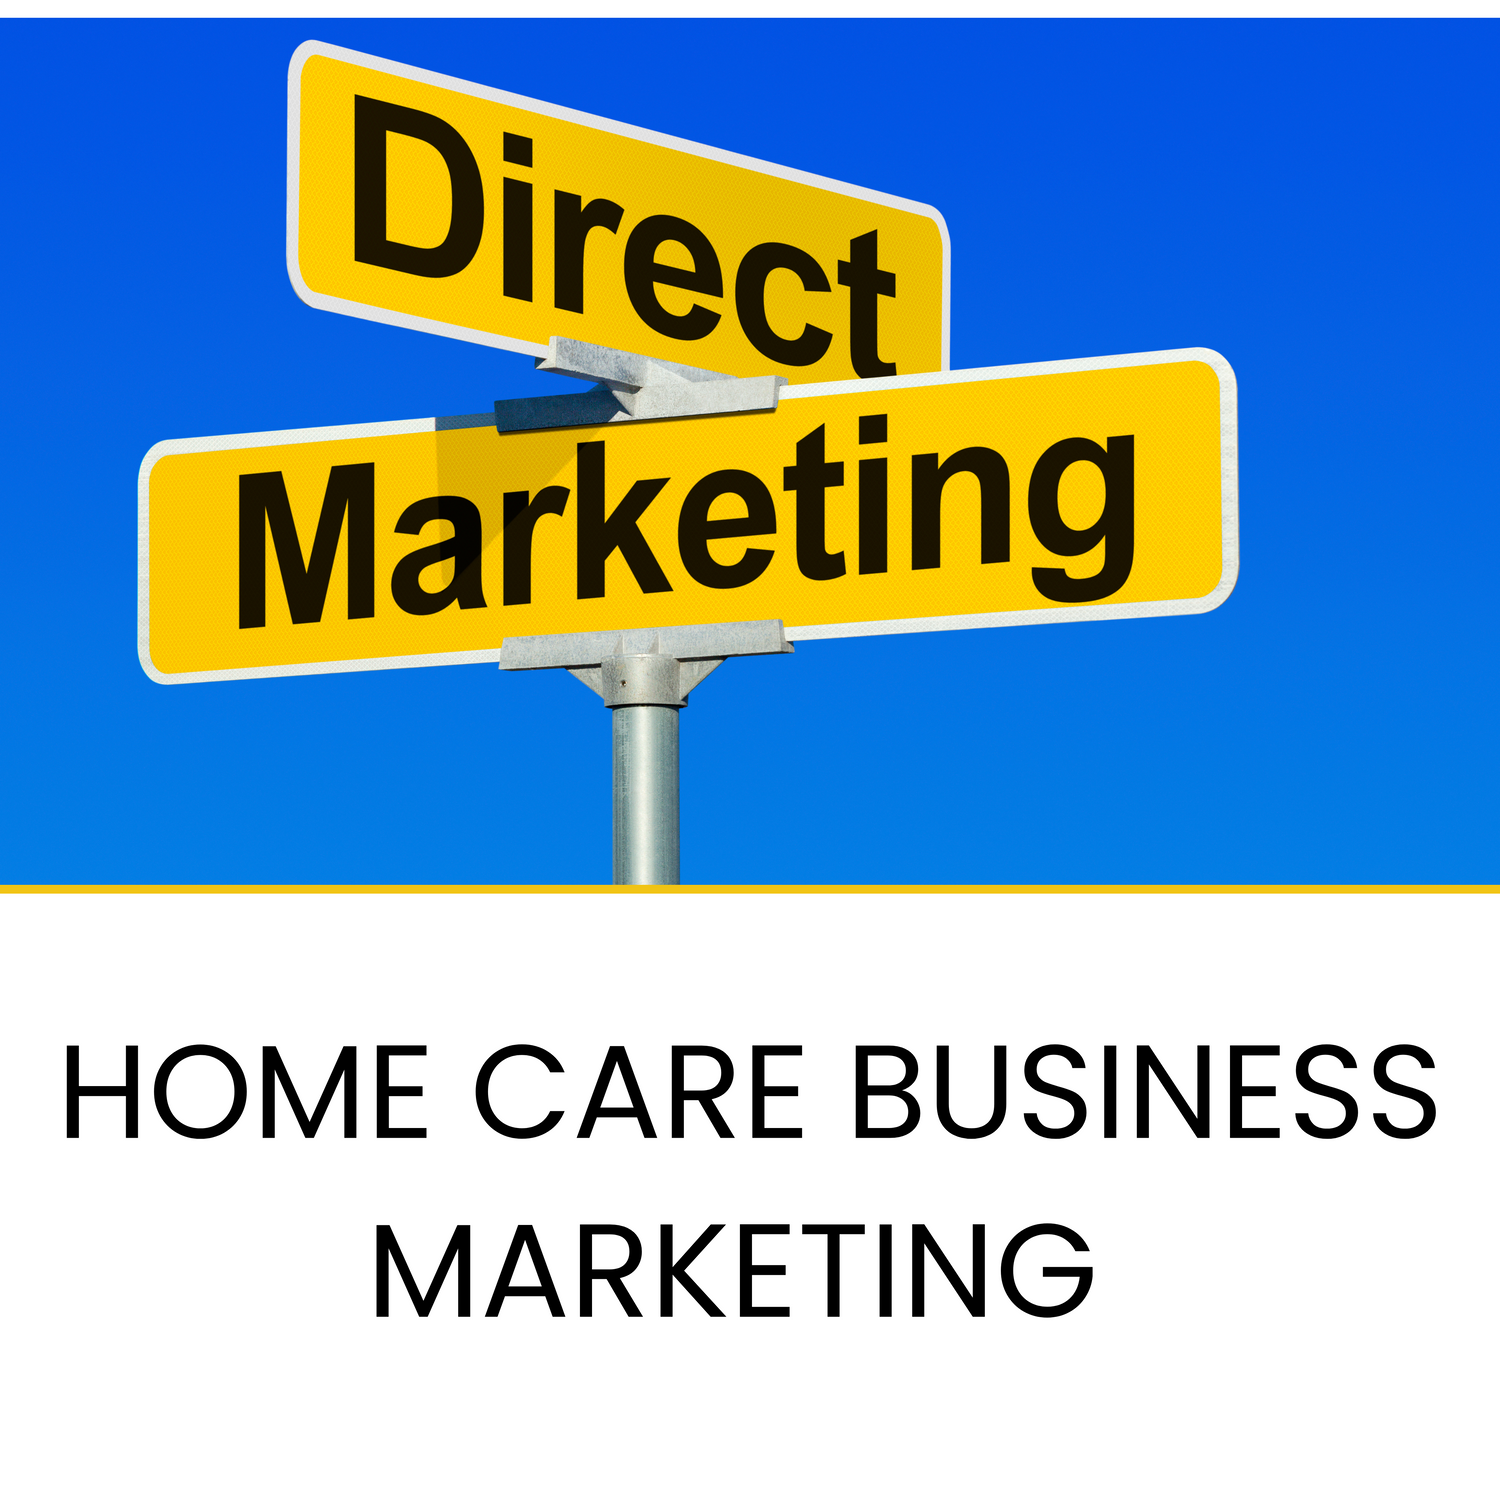 Home Care Business Marketing